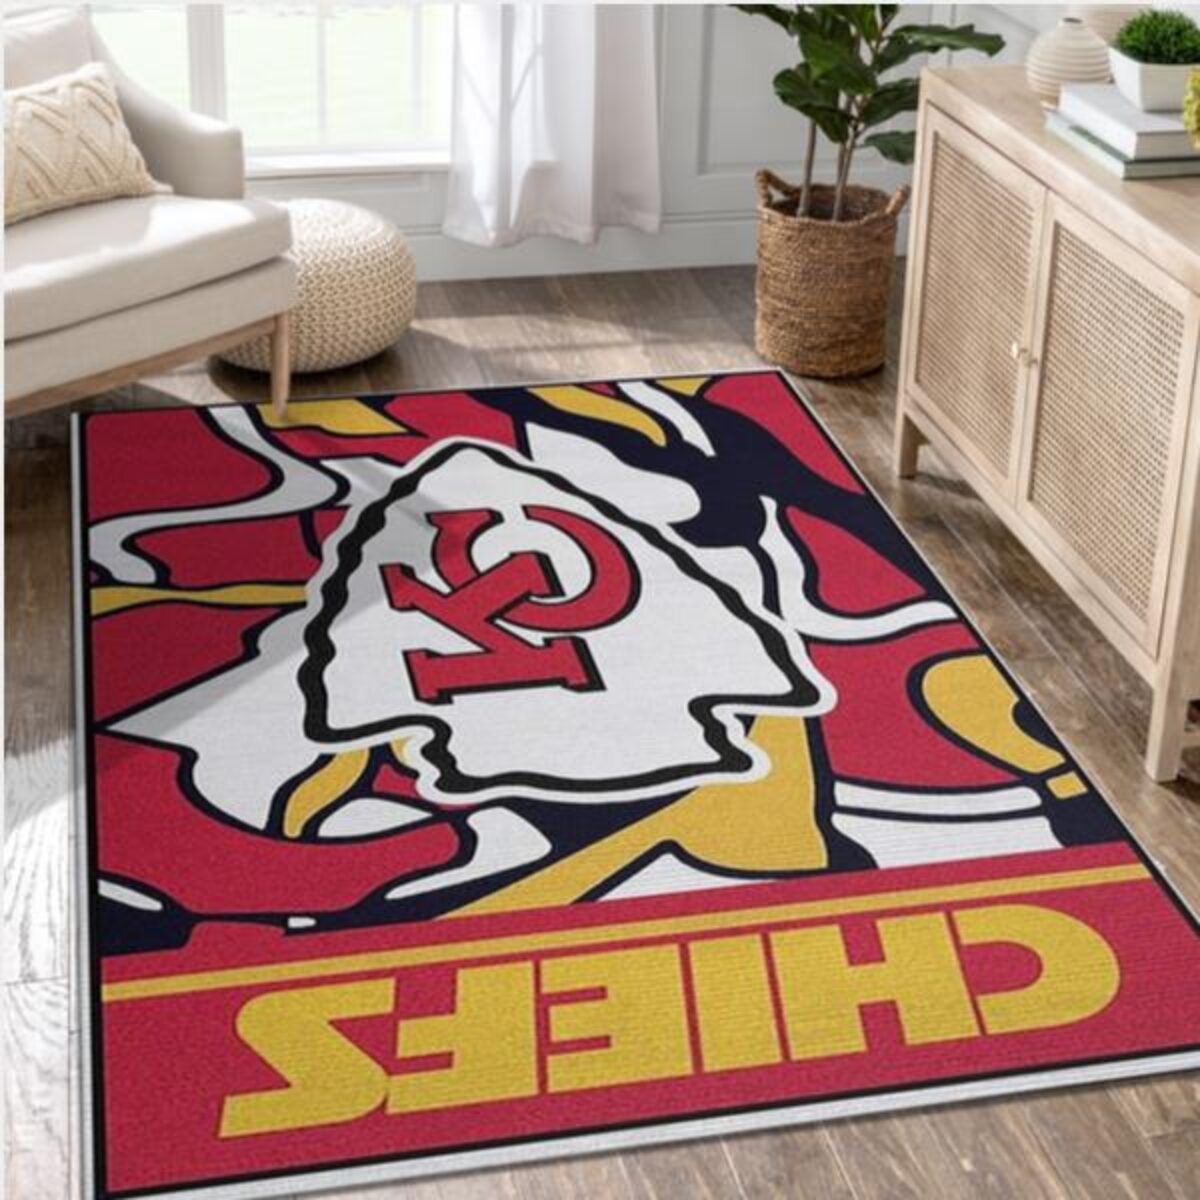 https://petorugs.com/wp-content/uploads/2023/06/Kansas-City-Chiefs-NFL-Area-Rug-Carpet-Kitchen-Rug-Home-Decor-Floor-Decor-1200x1200.jpg